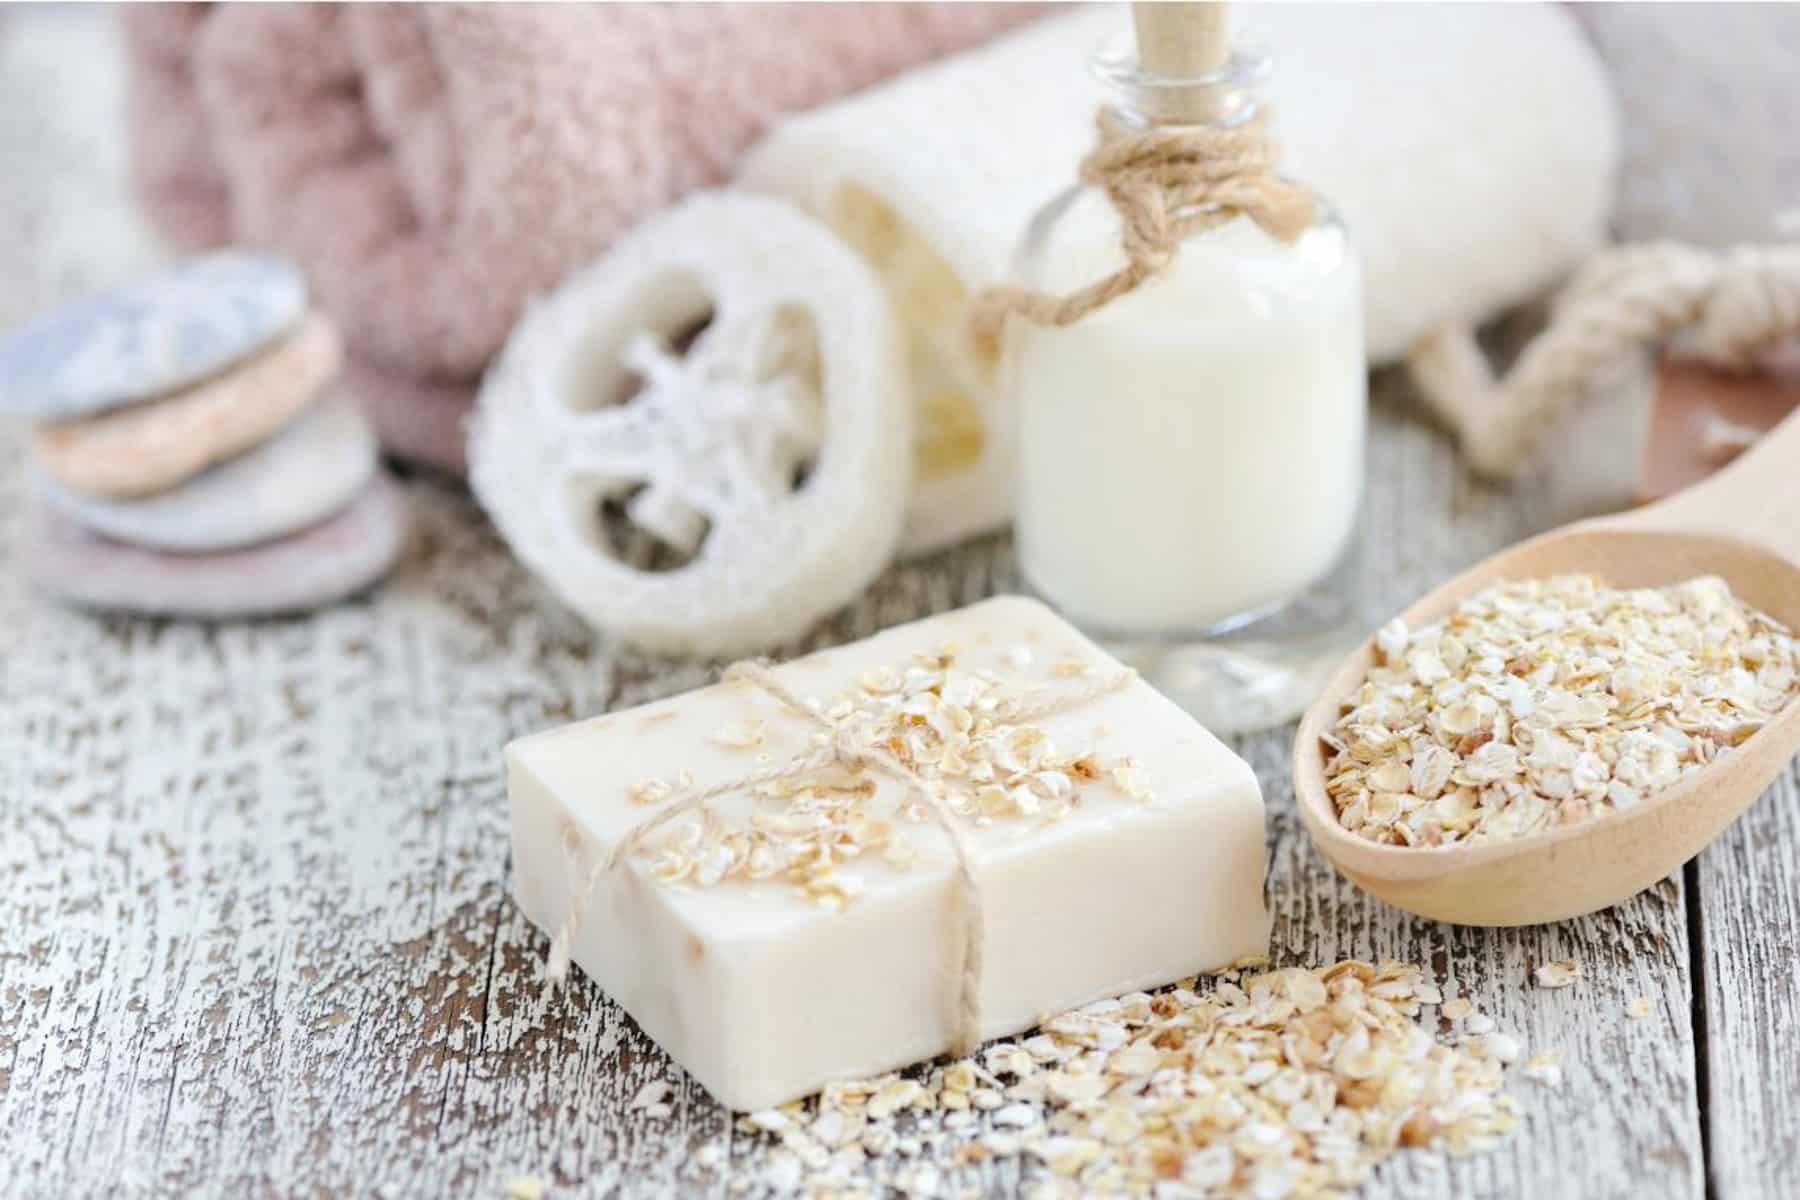 benefits of goat milk soap